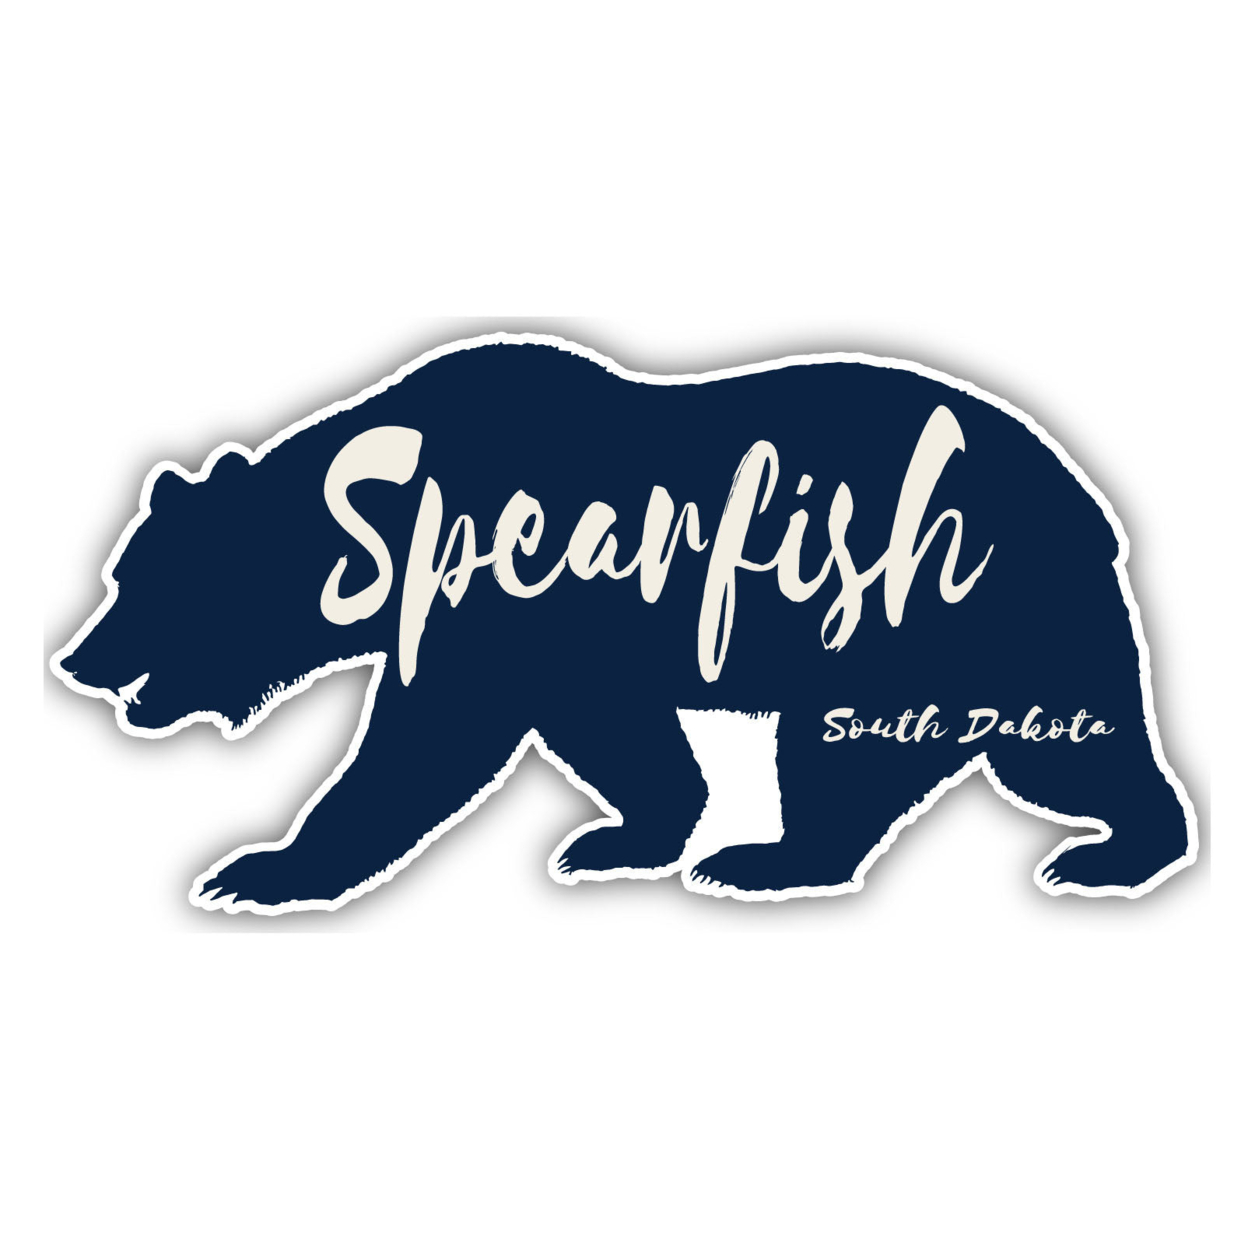 Spearfish South Dakota Souvenir Decorative Stickers (Choose Theme And Size) - Single Unit, 2-Inch, Tent